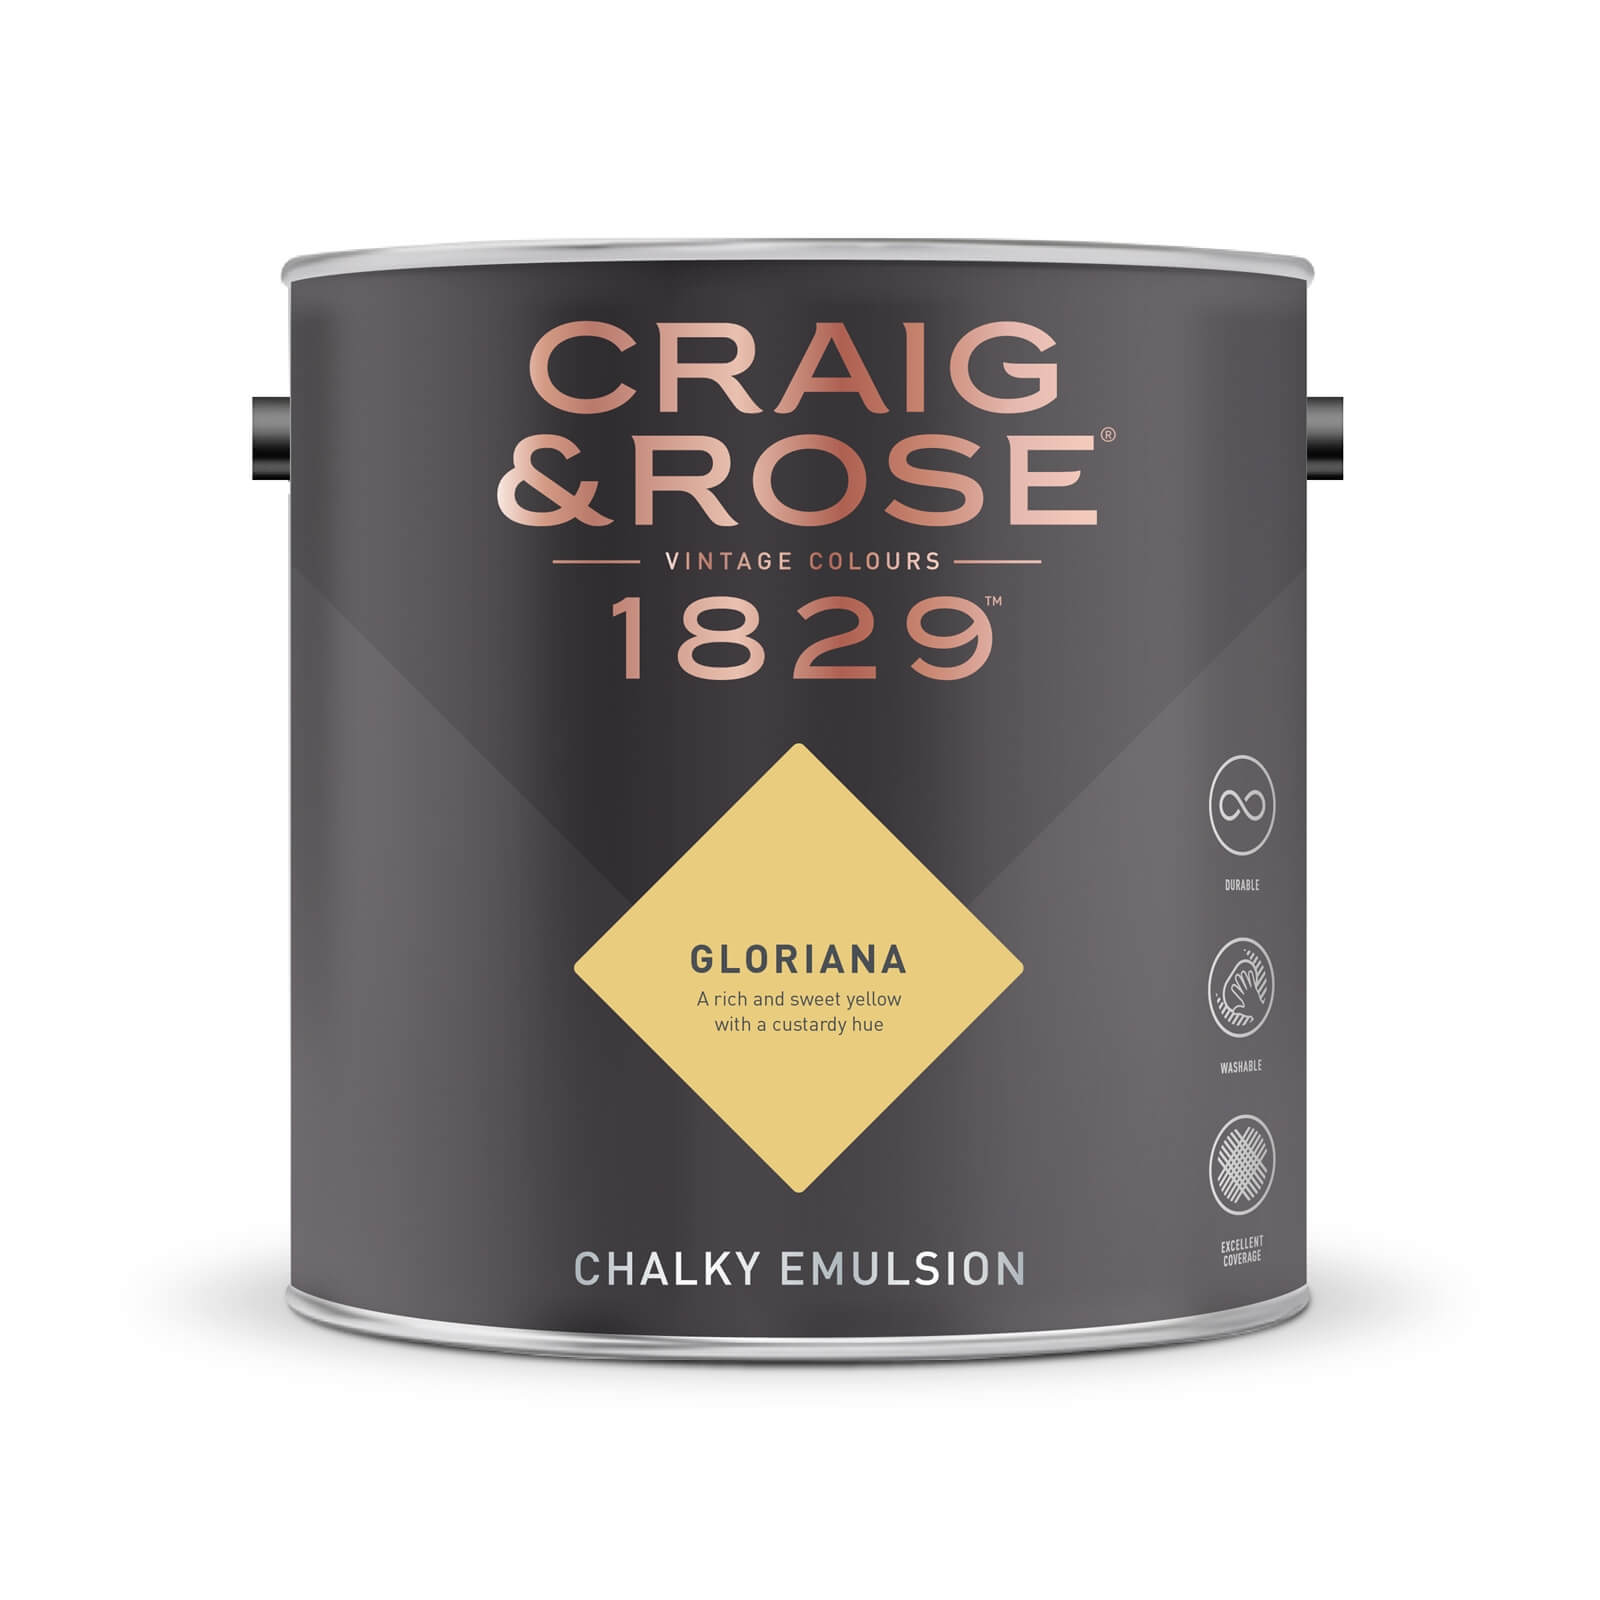 Craig & Rose 1829 Chalky Emulsion Paint Gloriana - Tester 50ml